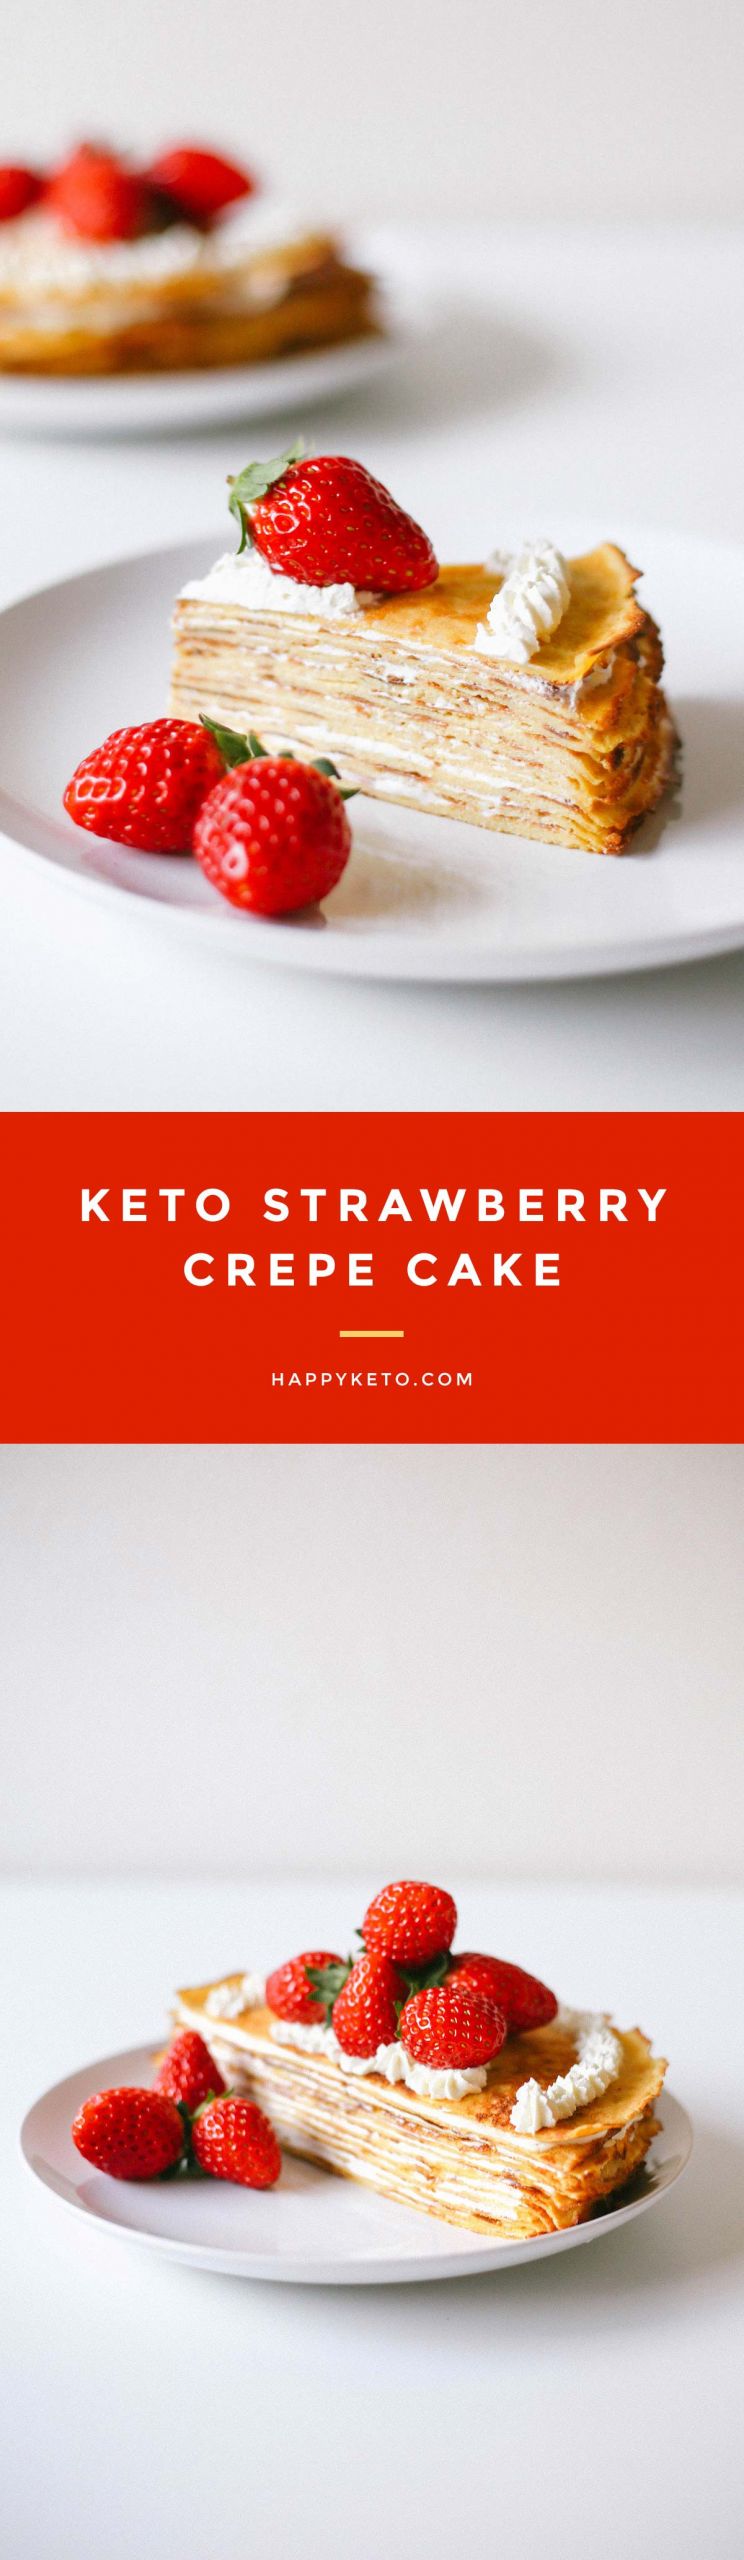 Keto Strawberry Cake
 Keto Crepe Cake with Strawberries Mille Crêpe Happy Keto